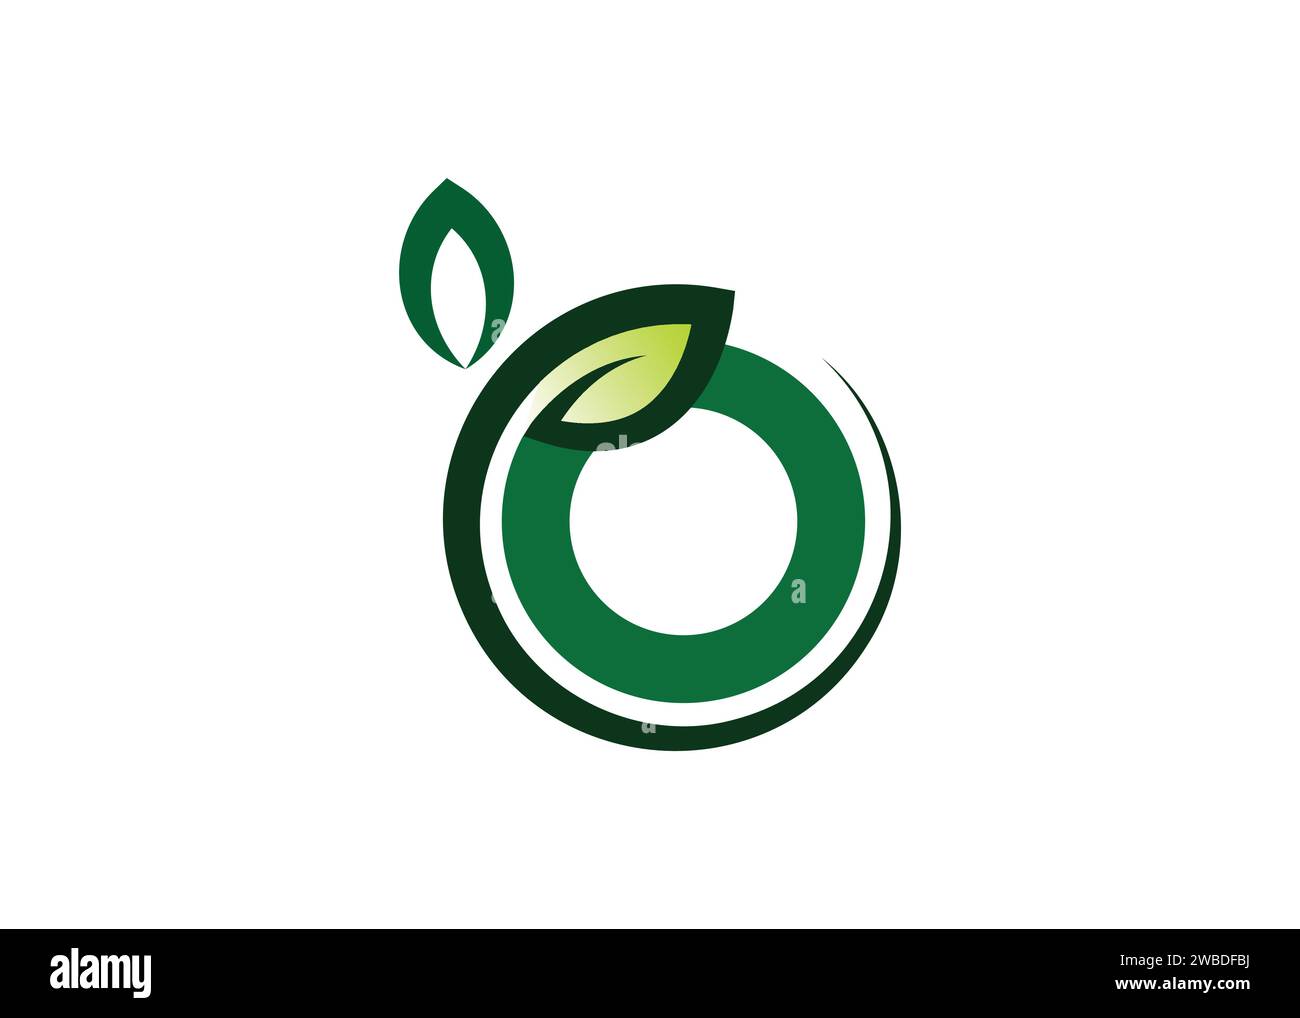 Letter O Green Leaf Logo Design Vektorvorlage. Letter O Nature Growth Leaf Vektor-Logo Stock Vektor